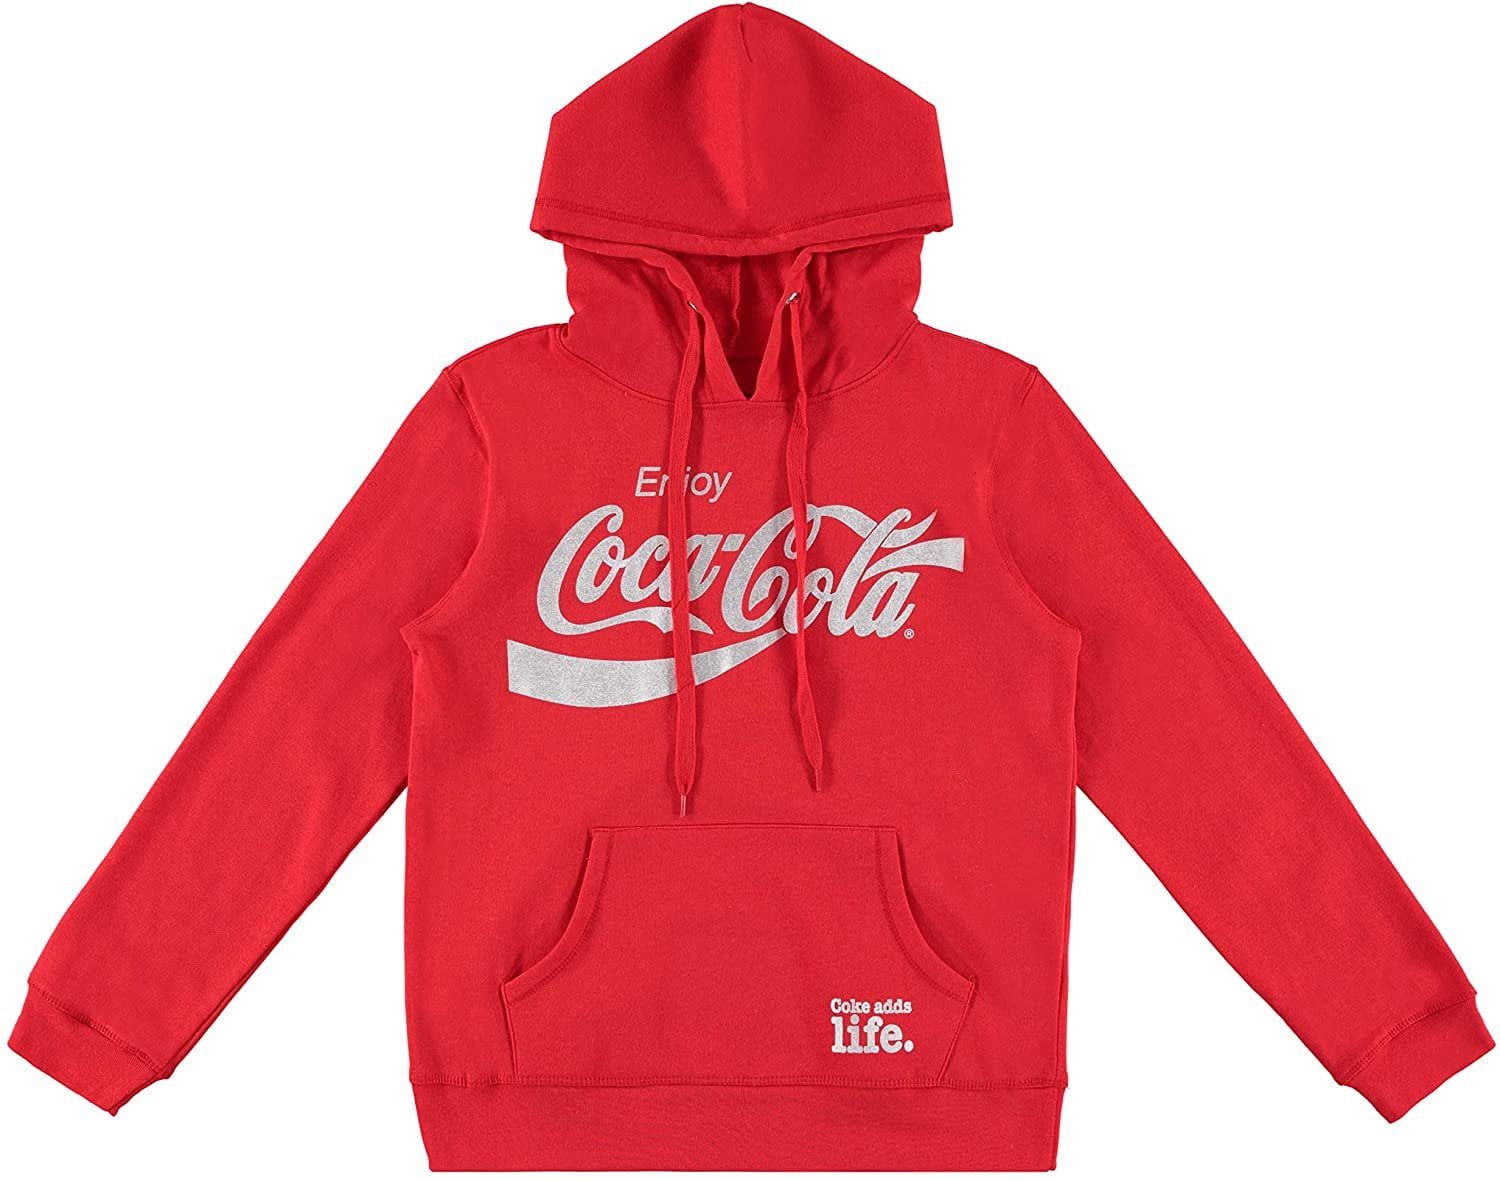 BRAND NEW Coca-Cola Red Coca-Cola Full-Zip Hooded Sweatshirt X-Large XL 